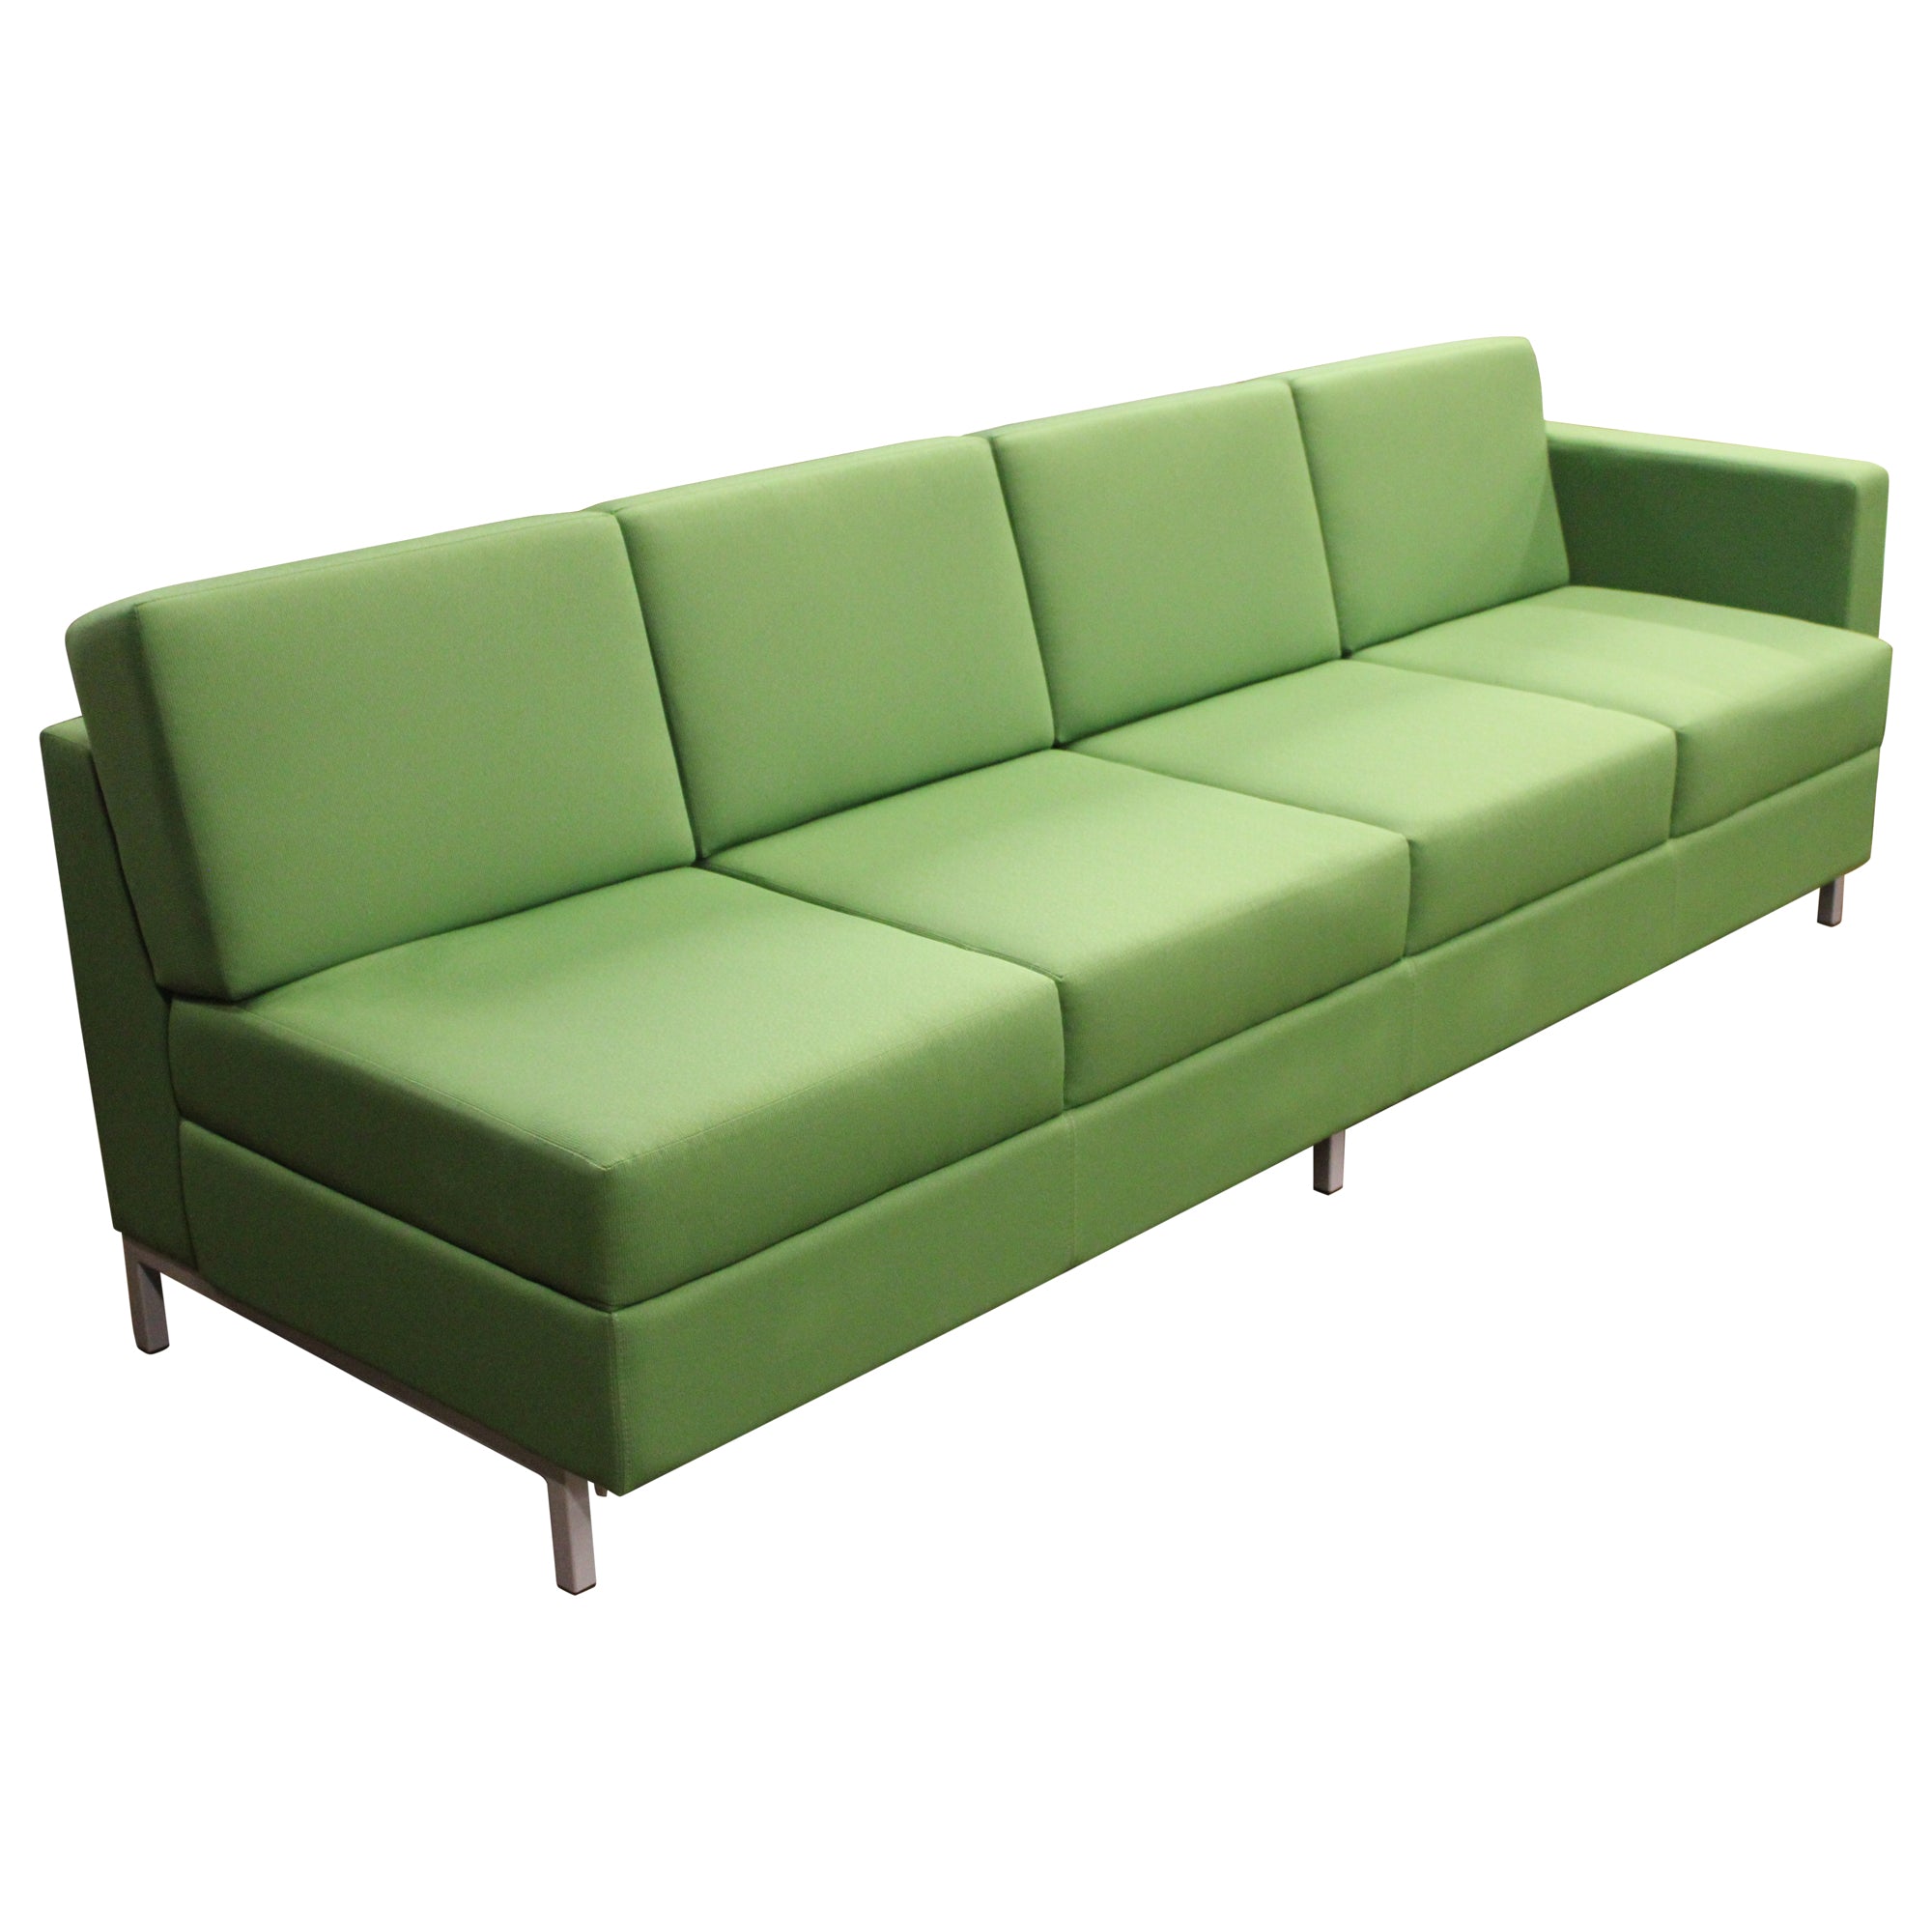 Global Citi Square 4-Seat Sofa, Green - Preowned